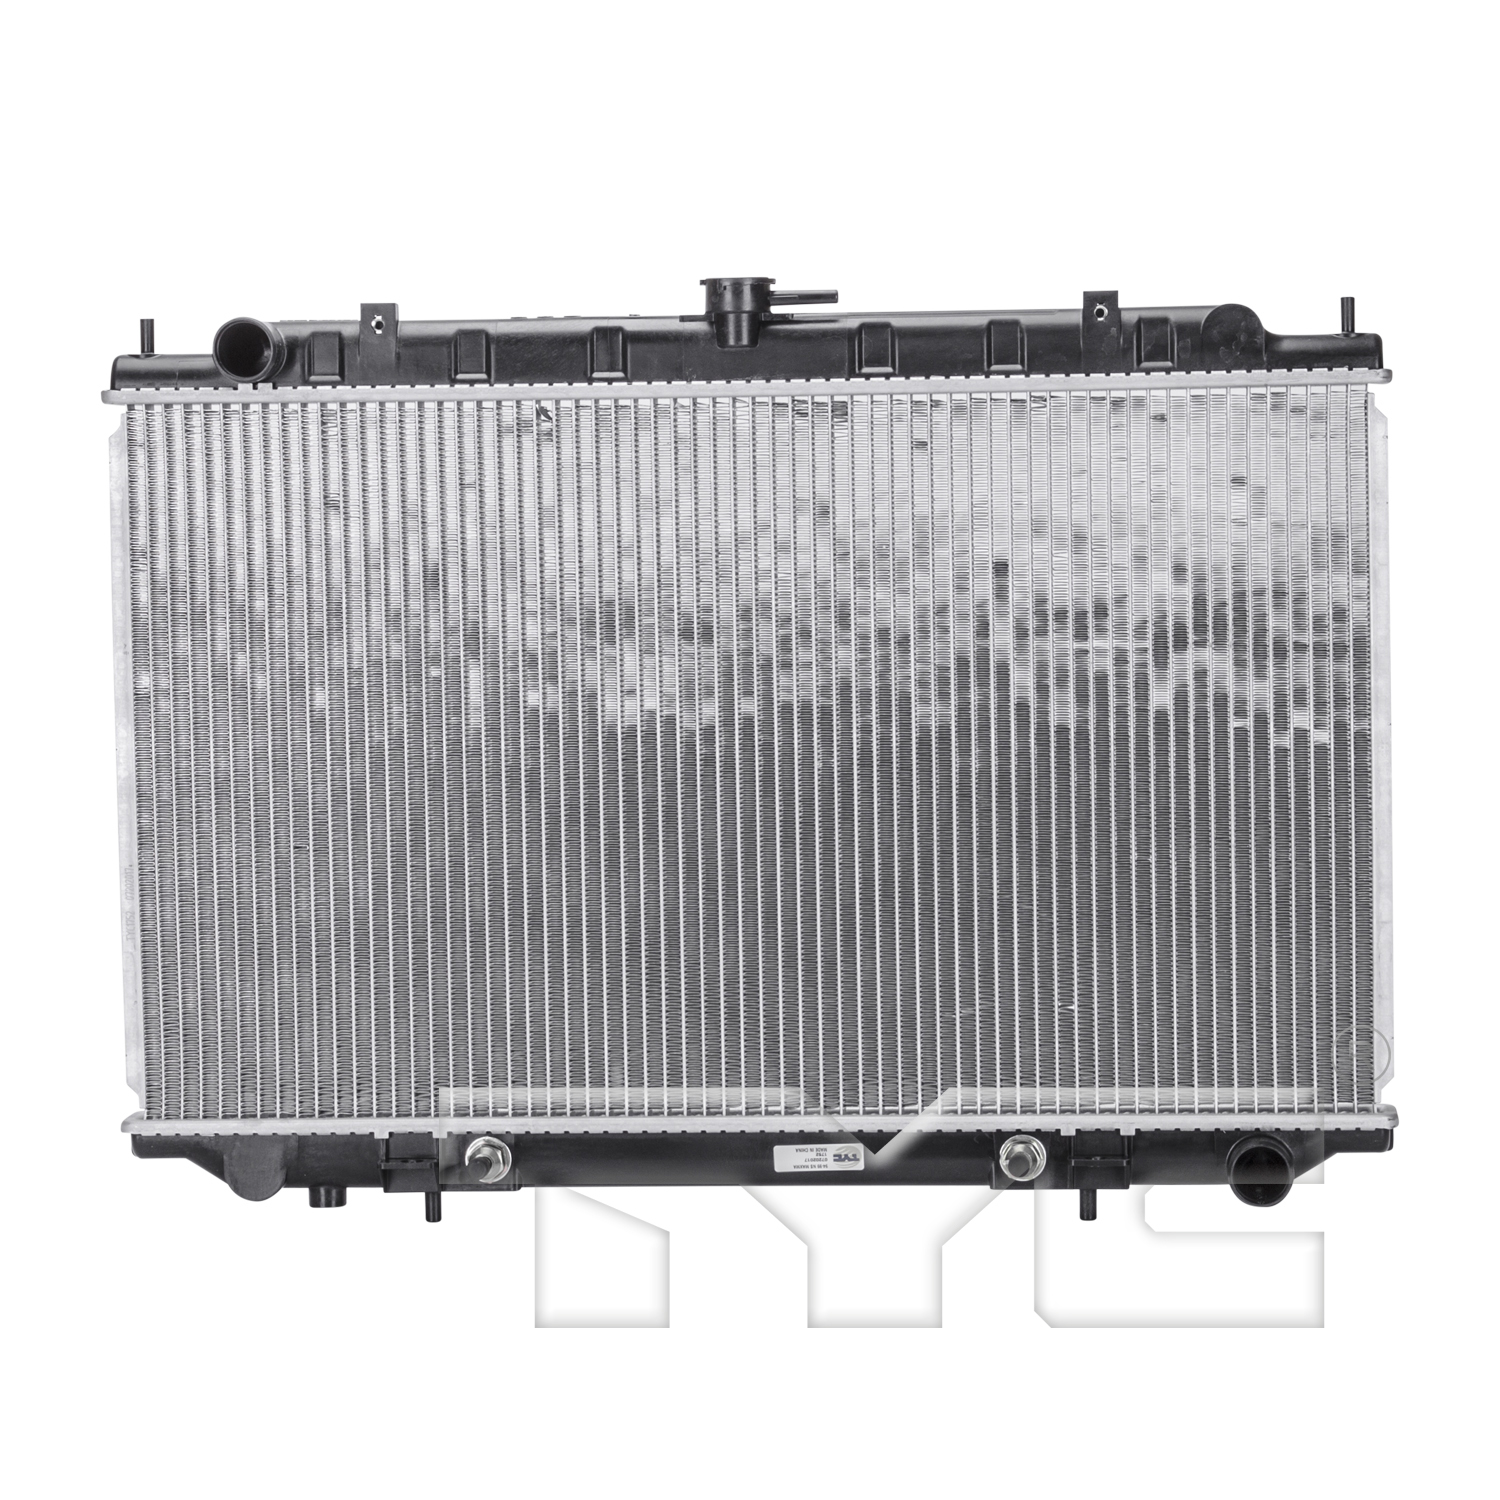 Aftermarket RADIATORS for INFINITI - I30, I30,96-99,Radiator assembly